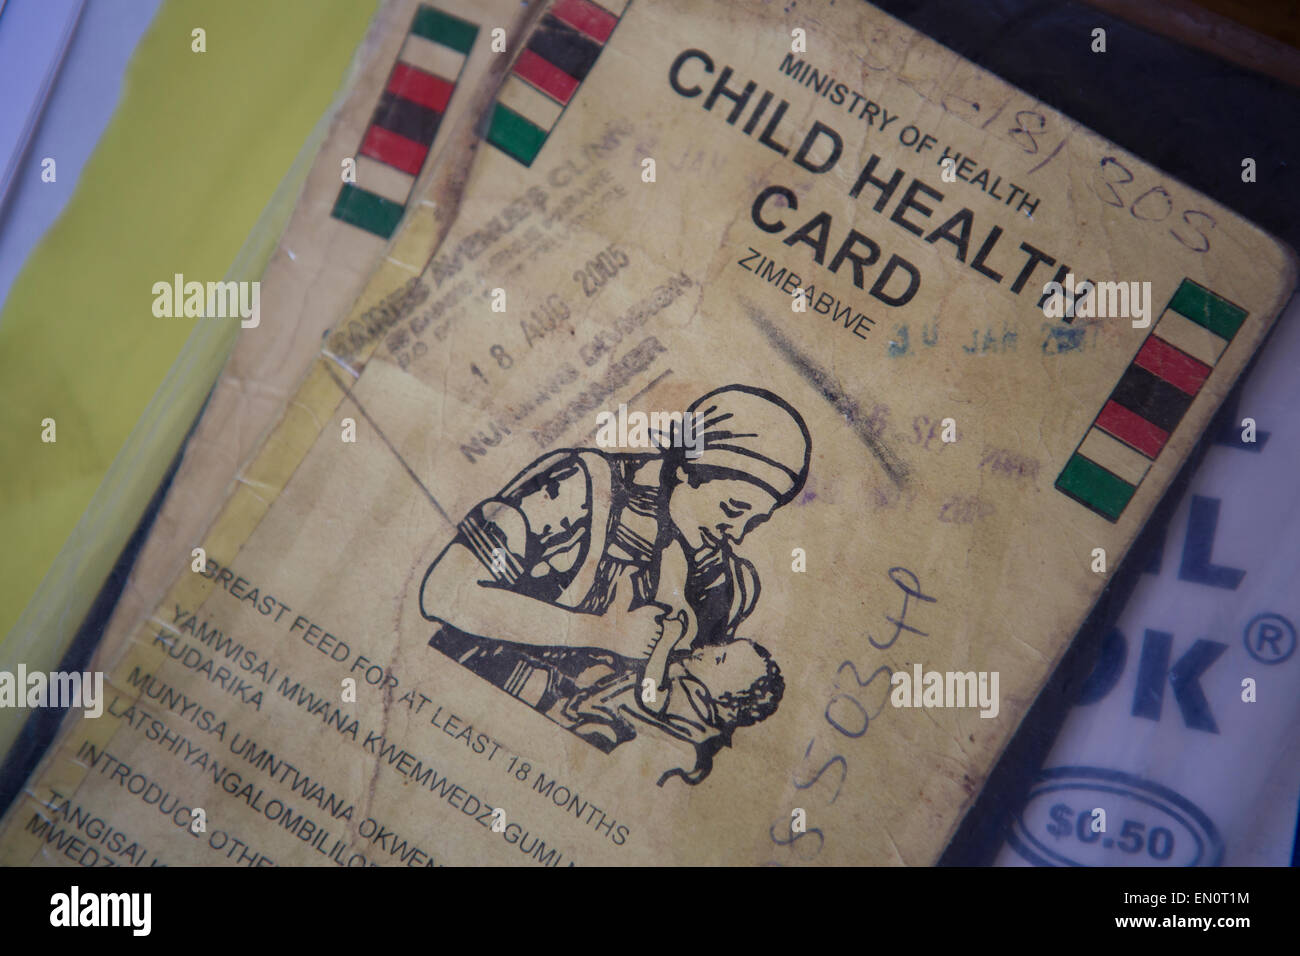 child health card in Zimbabwe Stock Photo